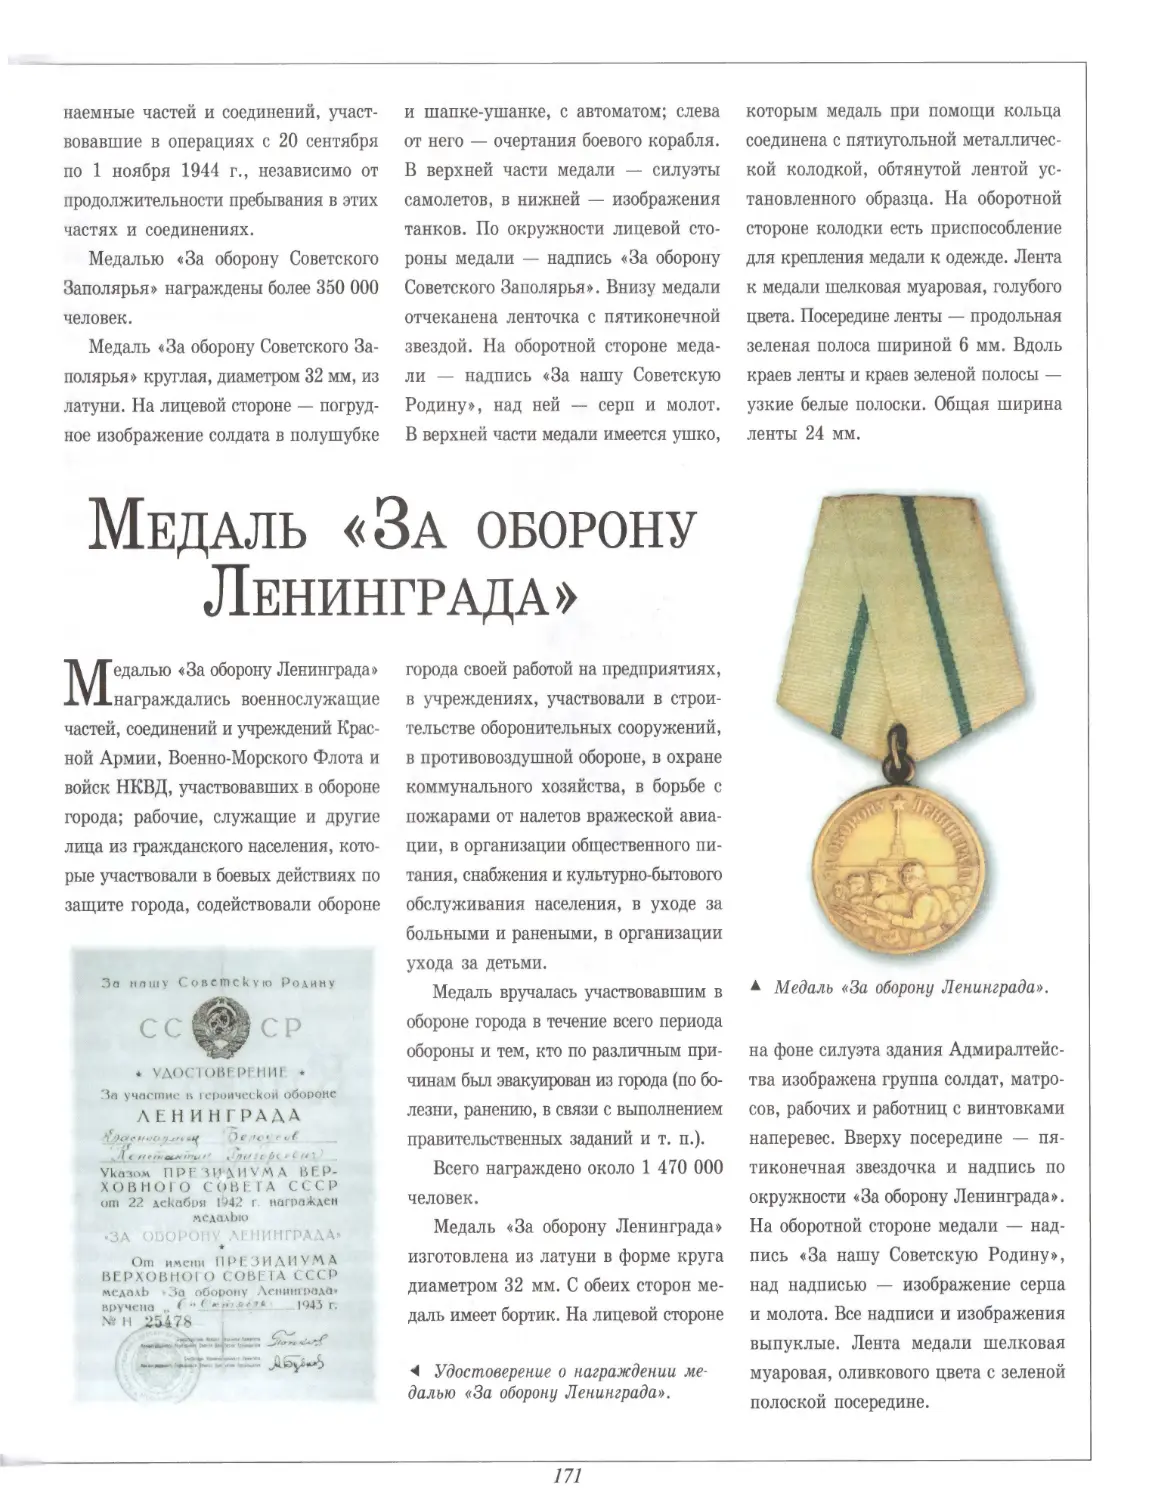 Медаль «За оборону Ленинграда\